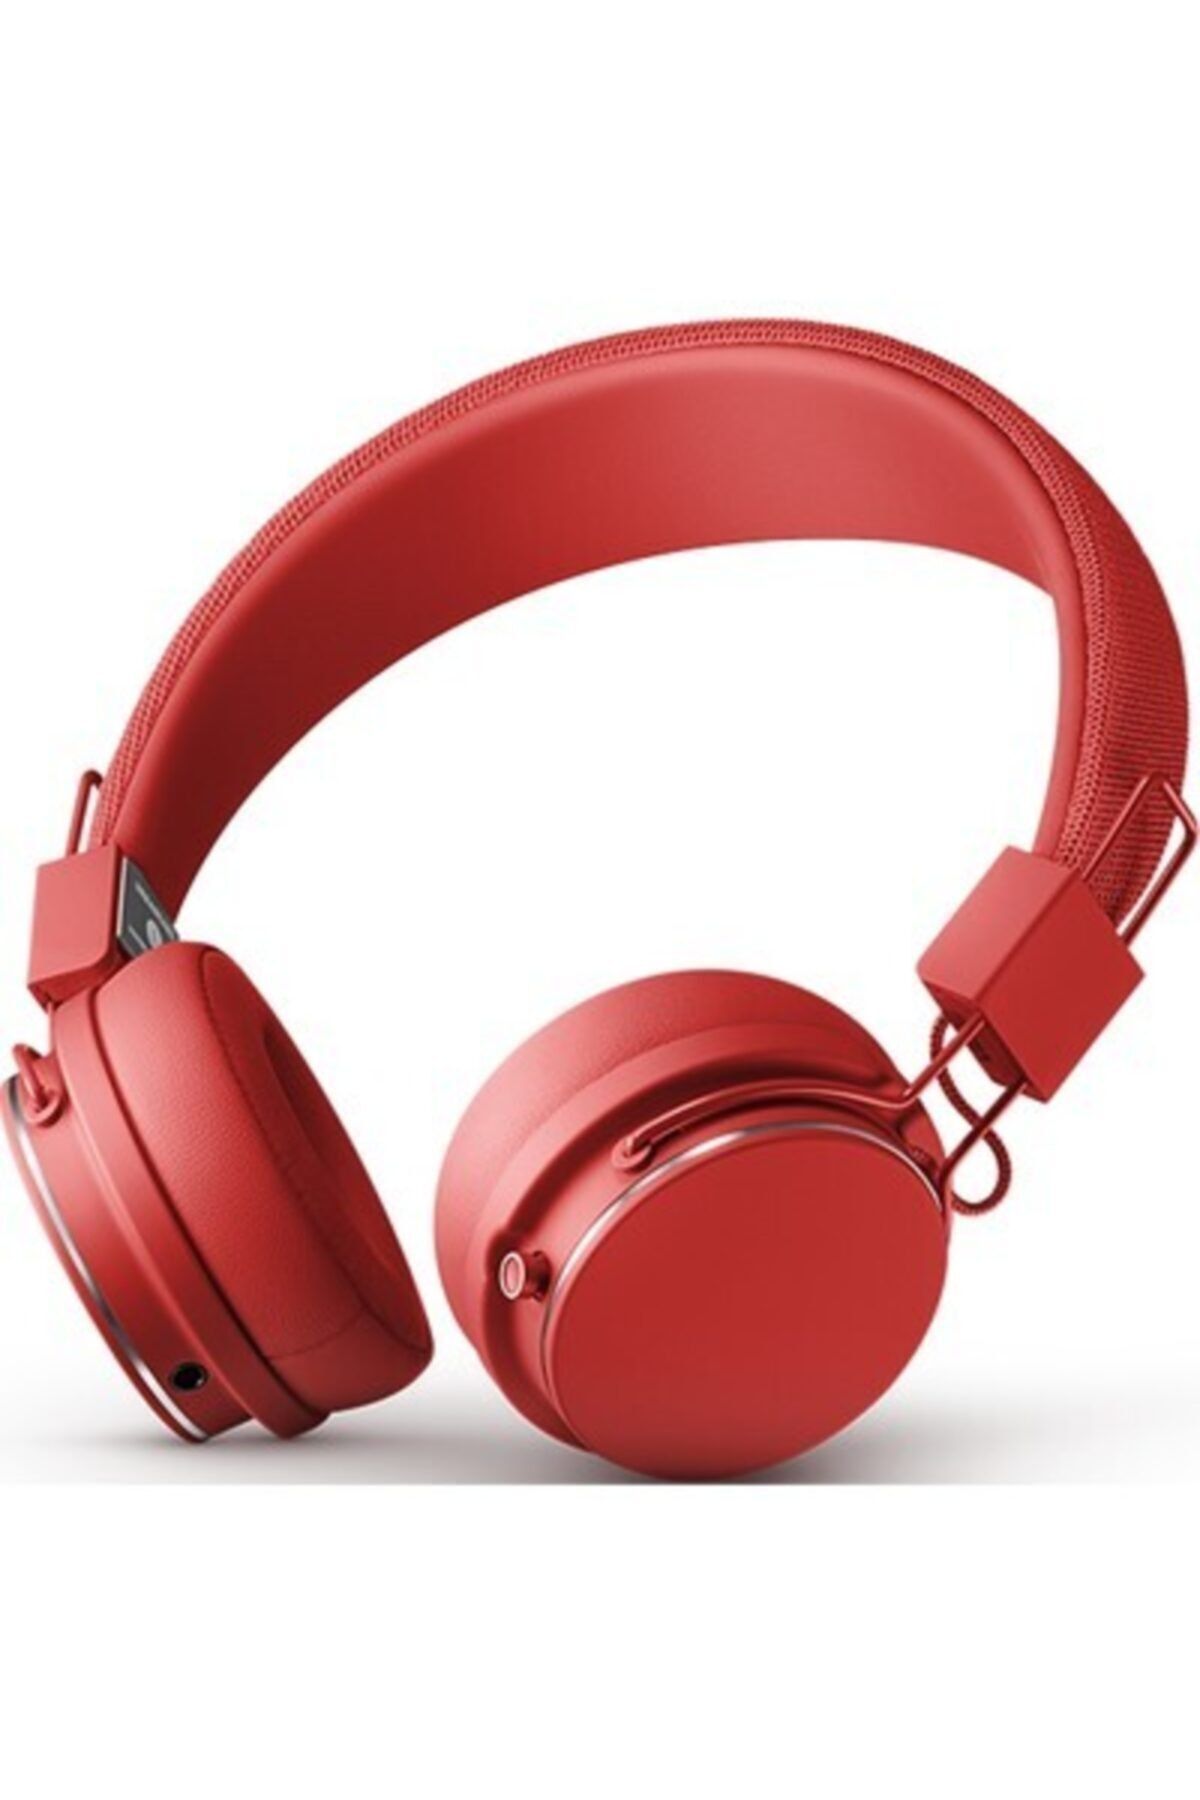 Urbanears Plattan Iı Bt Kulak Üstü Bluetooth Kulaklık - Kırmızı Zd.1002583